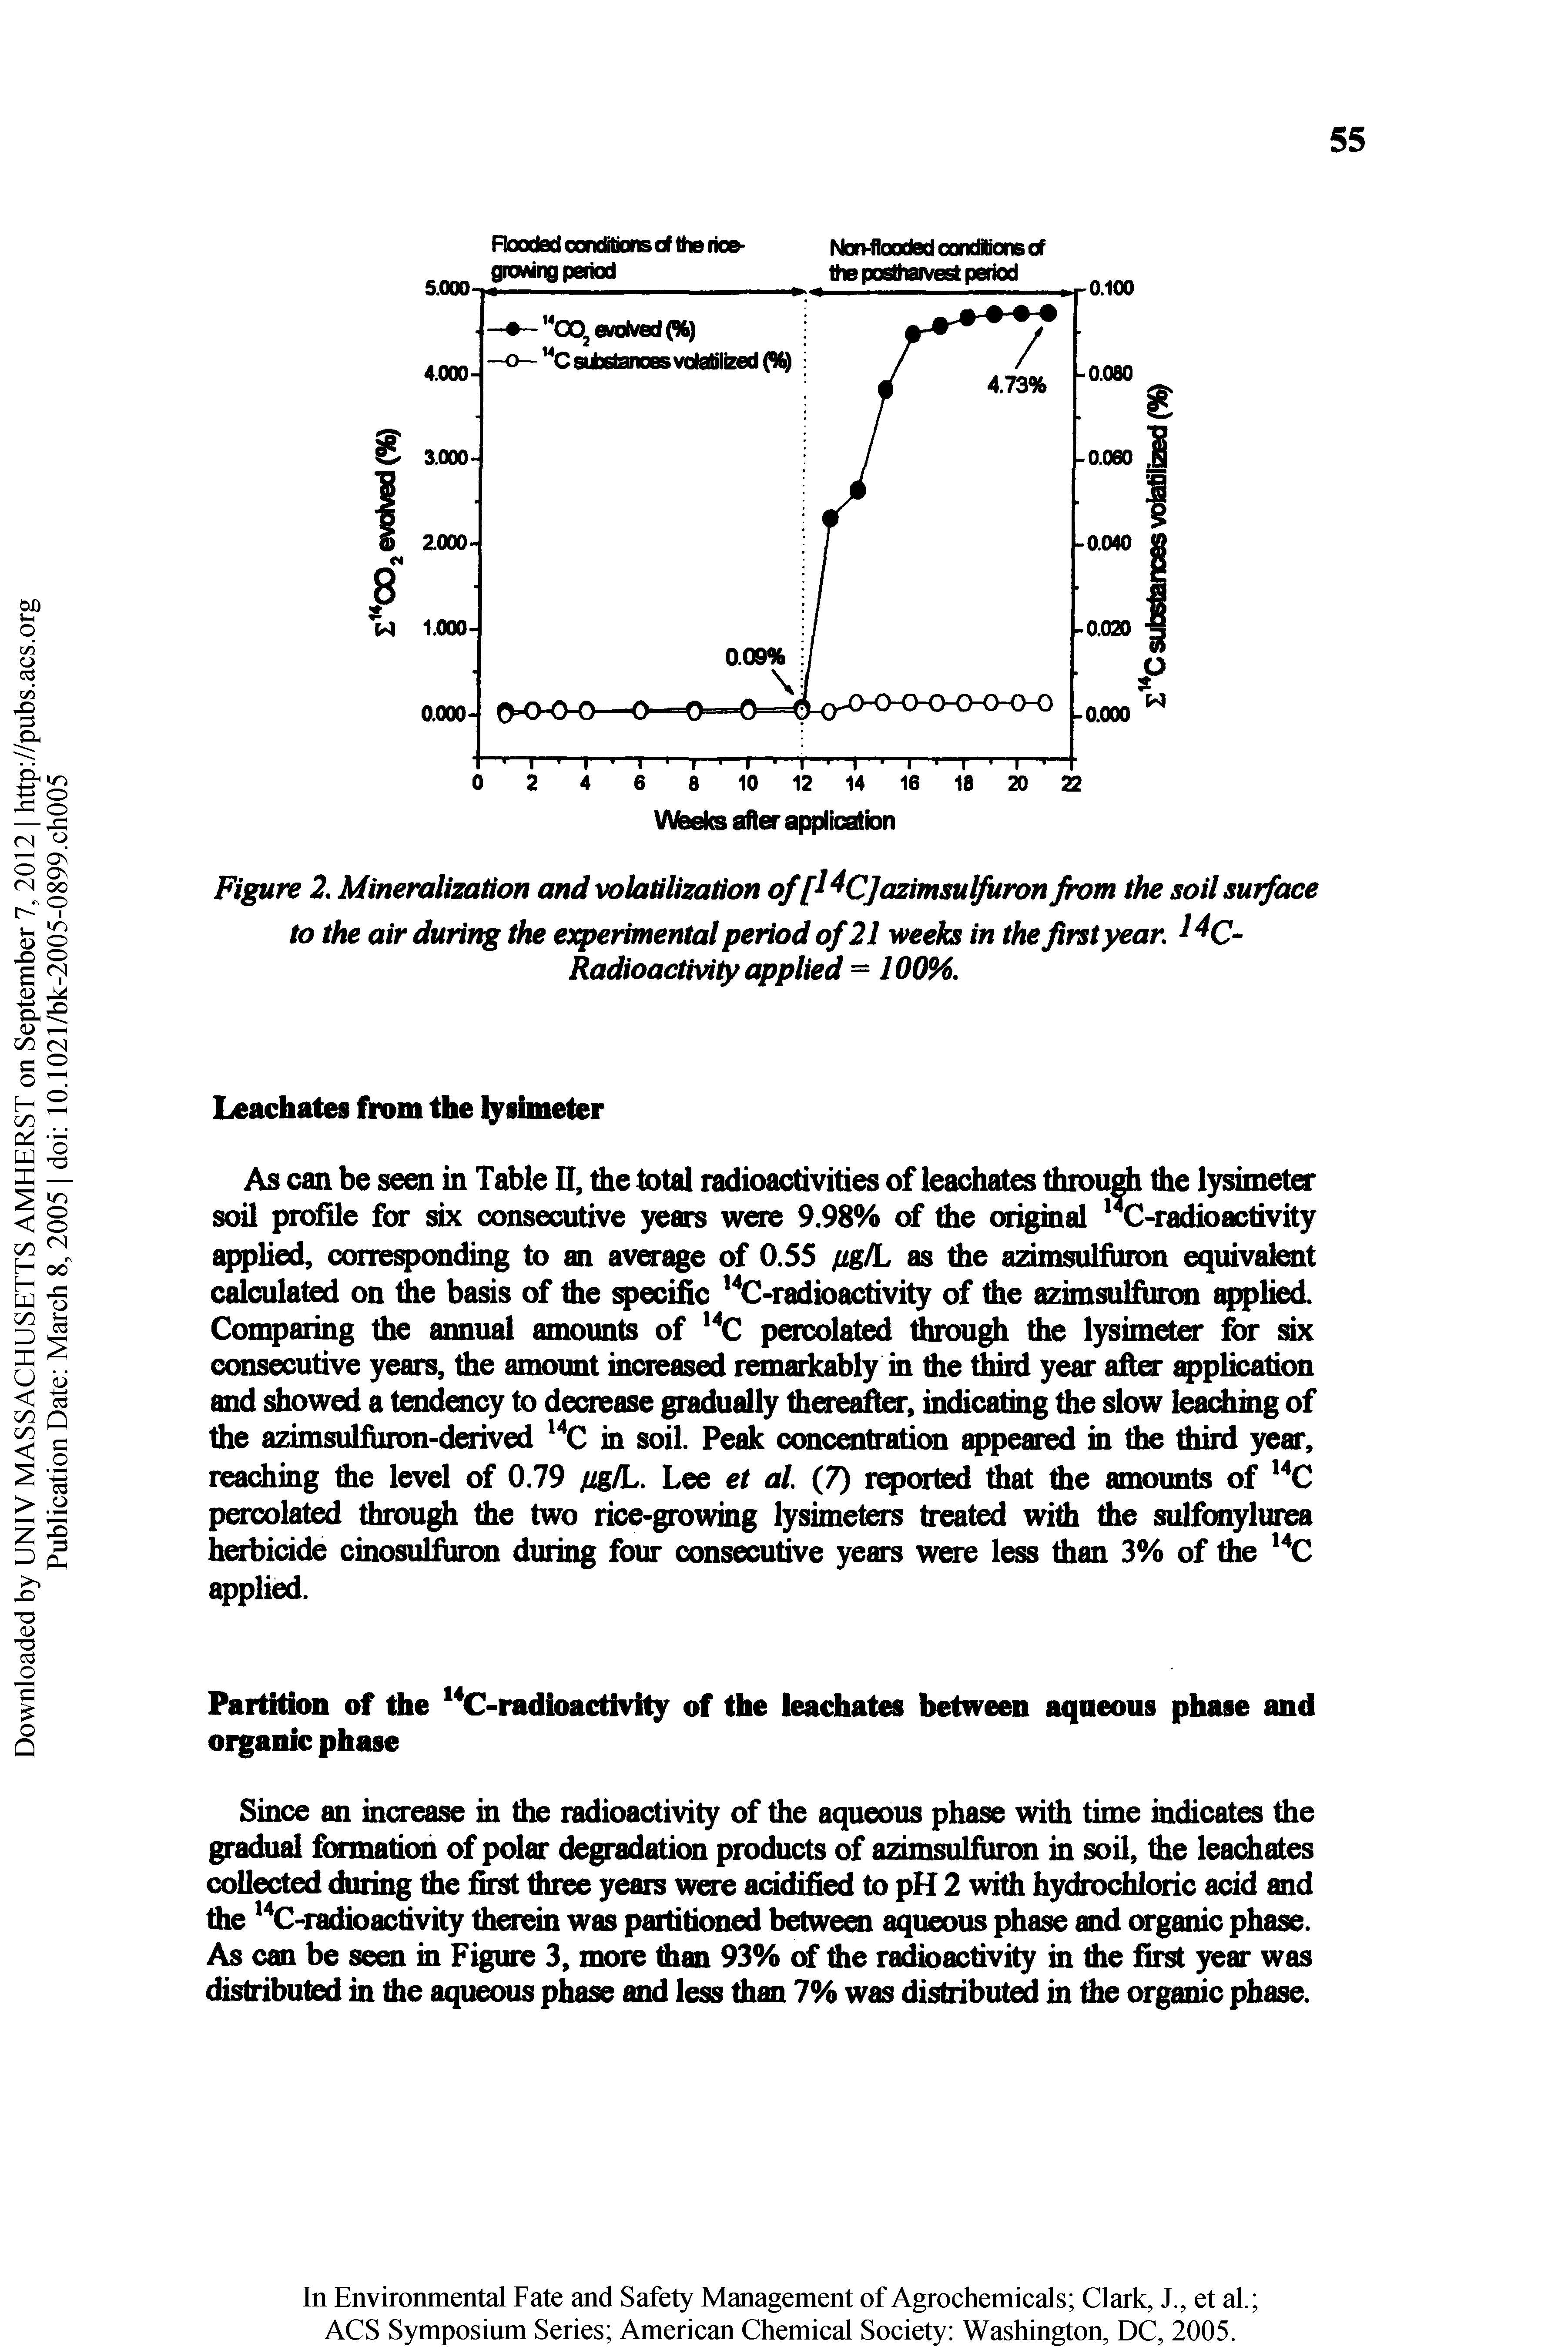 Figure 2 Mineralization and volatilization of fl CJazimsulfuron from the soil sutface...